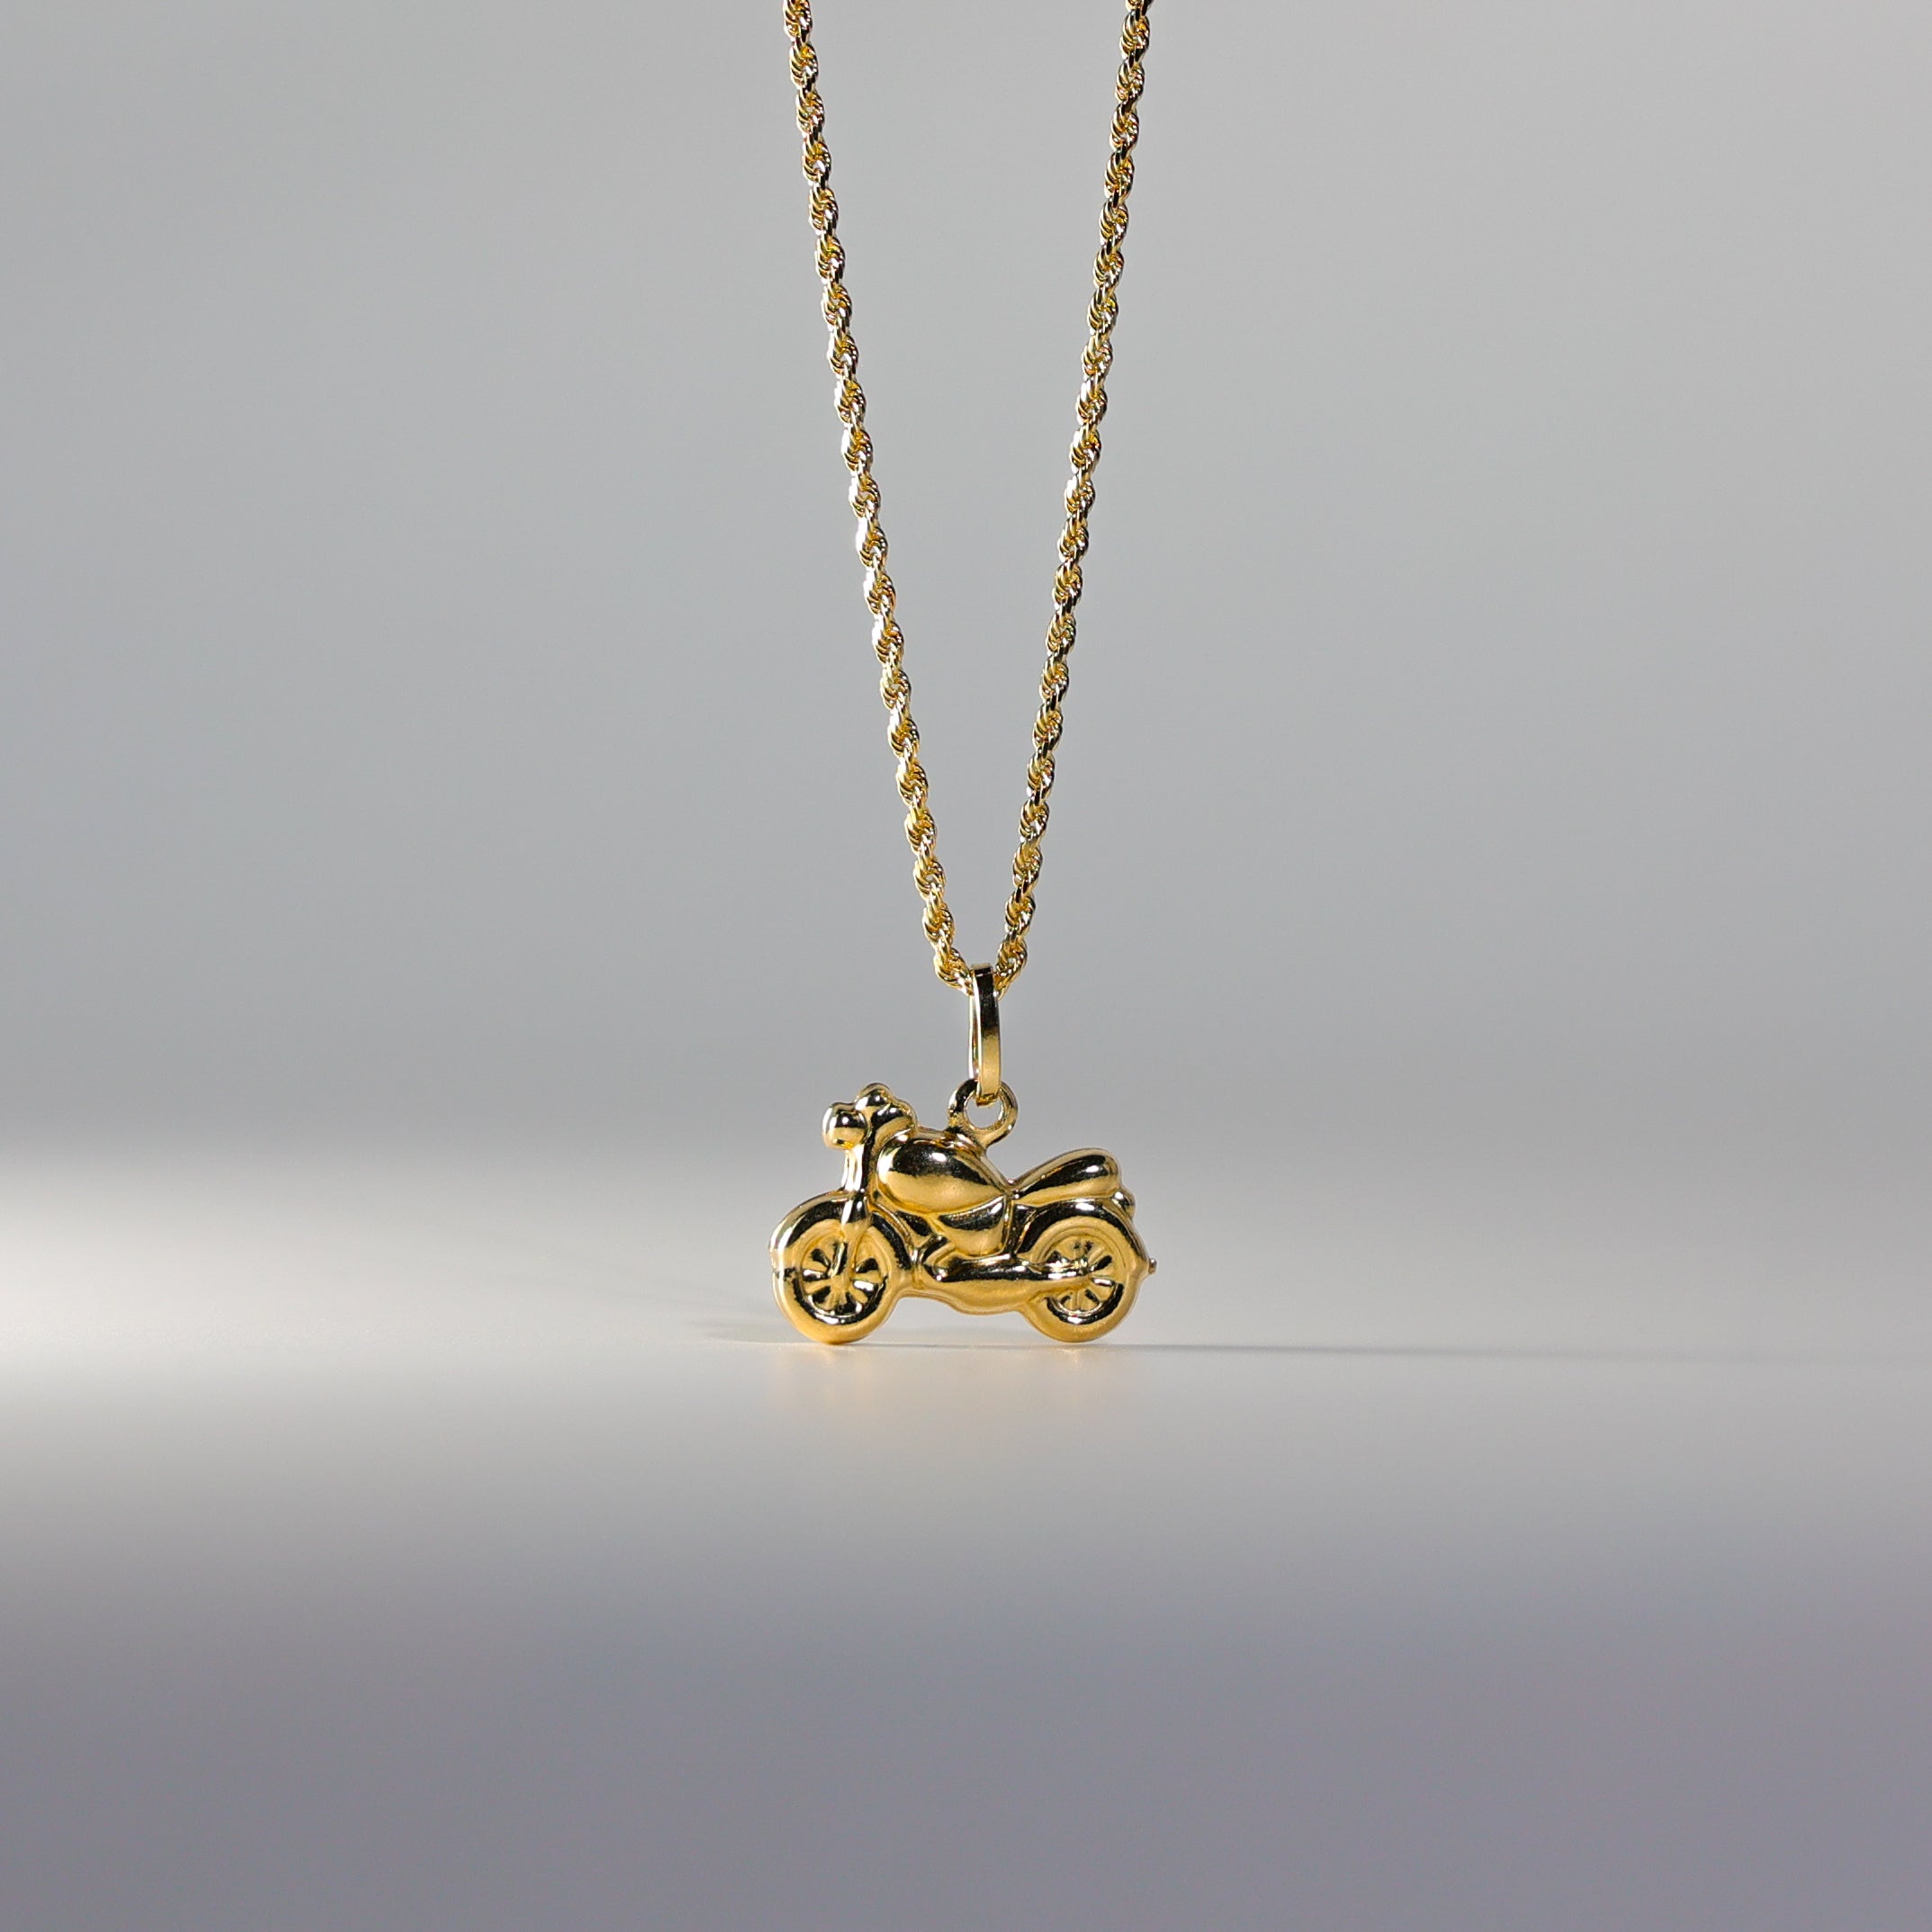 Gold Bike Pendant Model-1708 - Charlie & Co. Jewelry